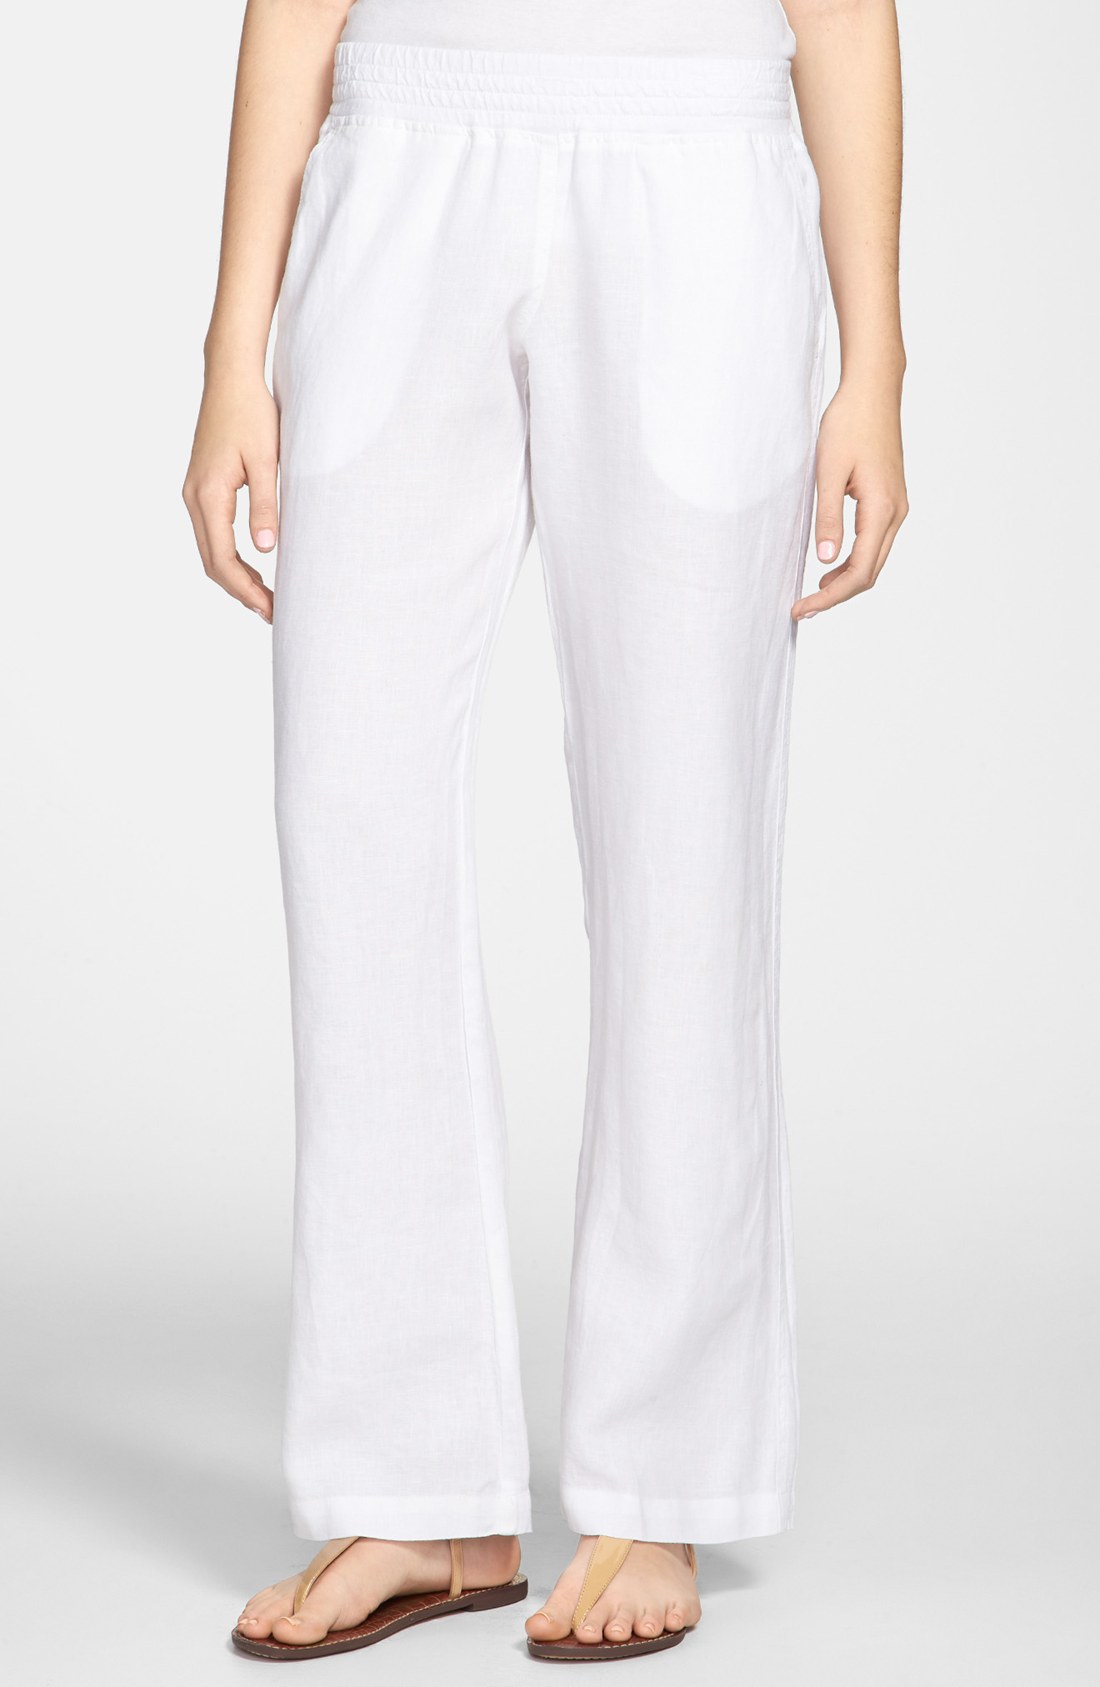 Allen Allen Linen Pants in White | Lyst